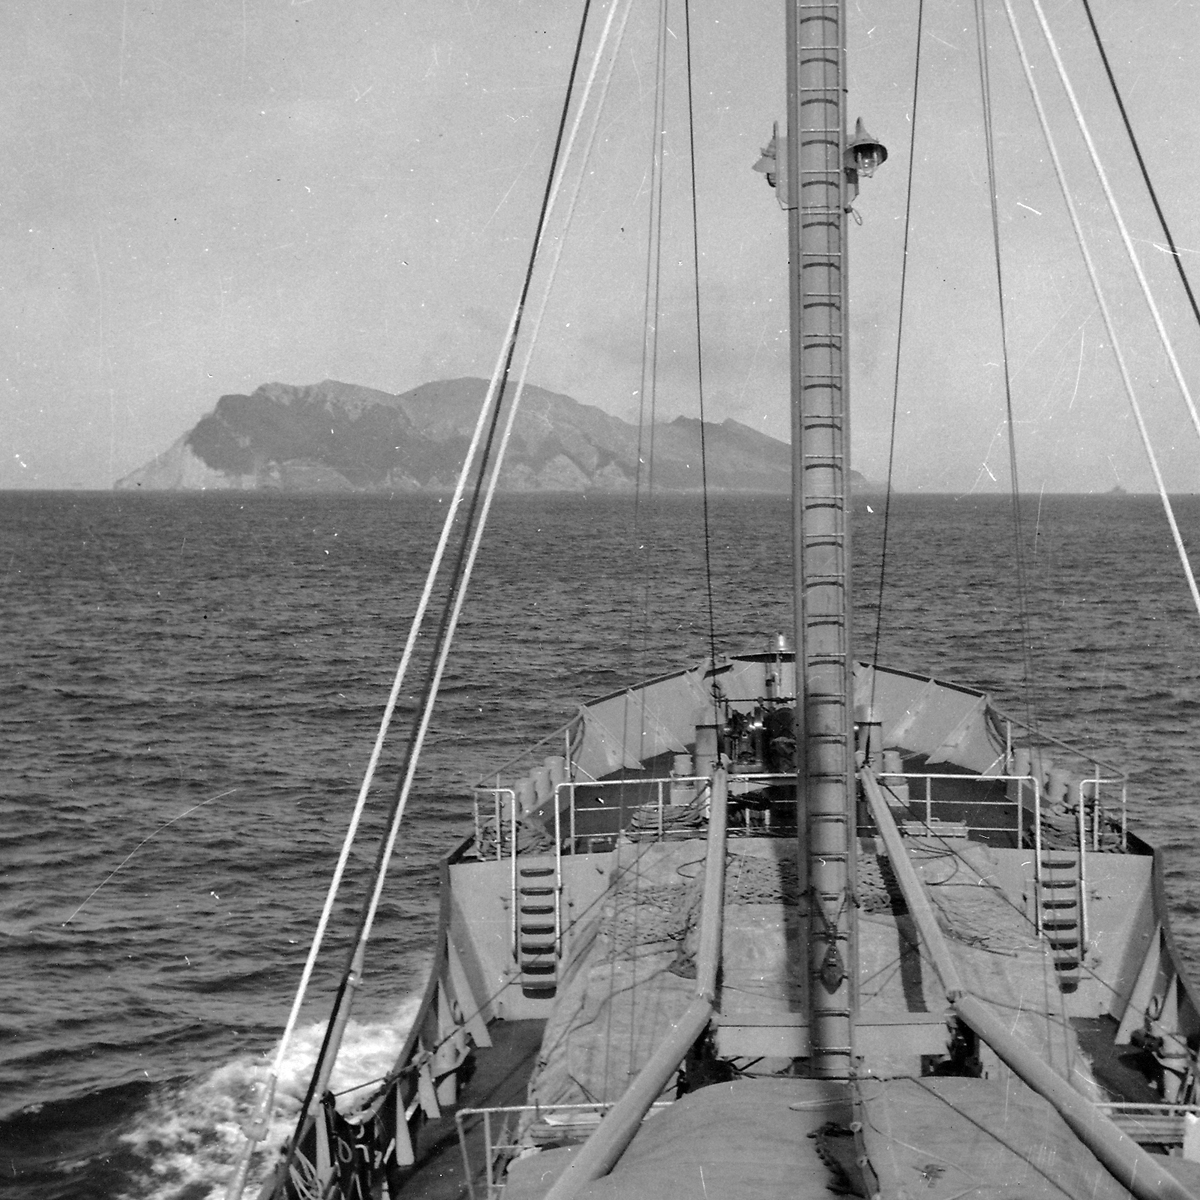 Alex's ship Maranui approaching White Island NZ